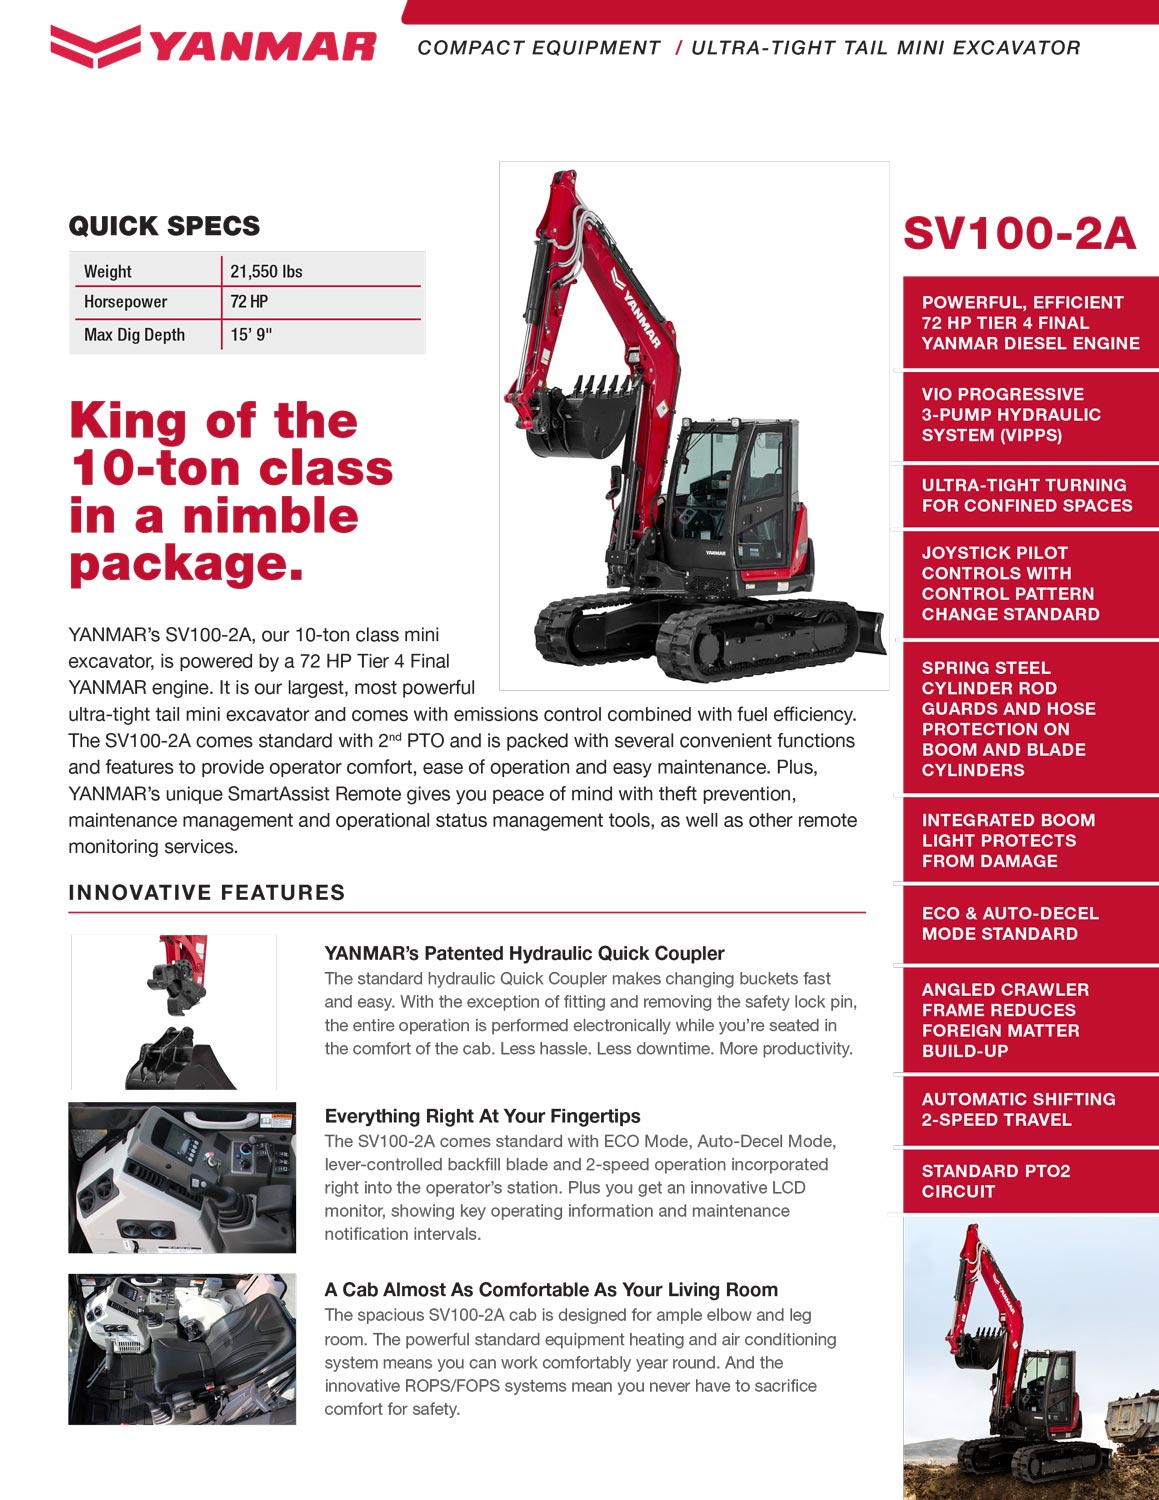 image of SV100-2A excavator